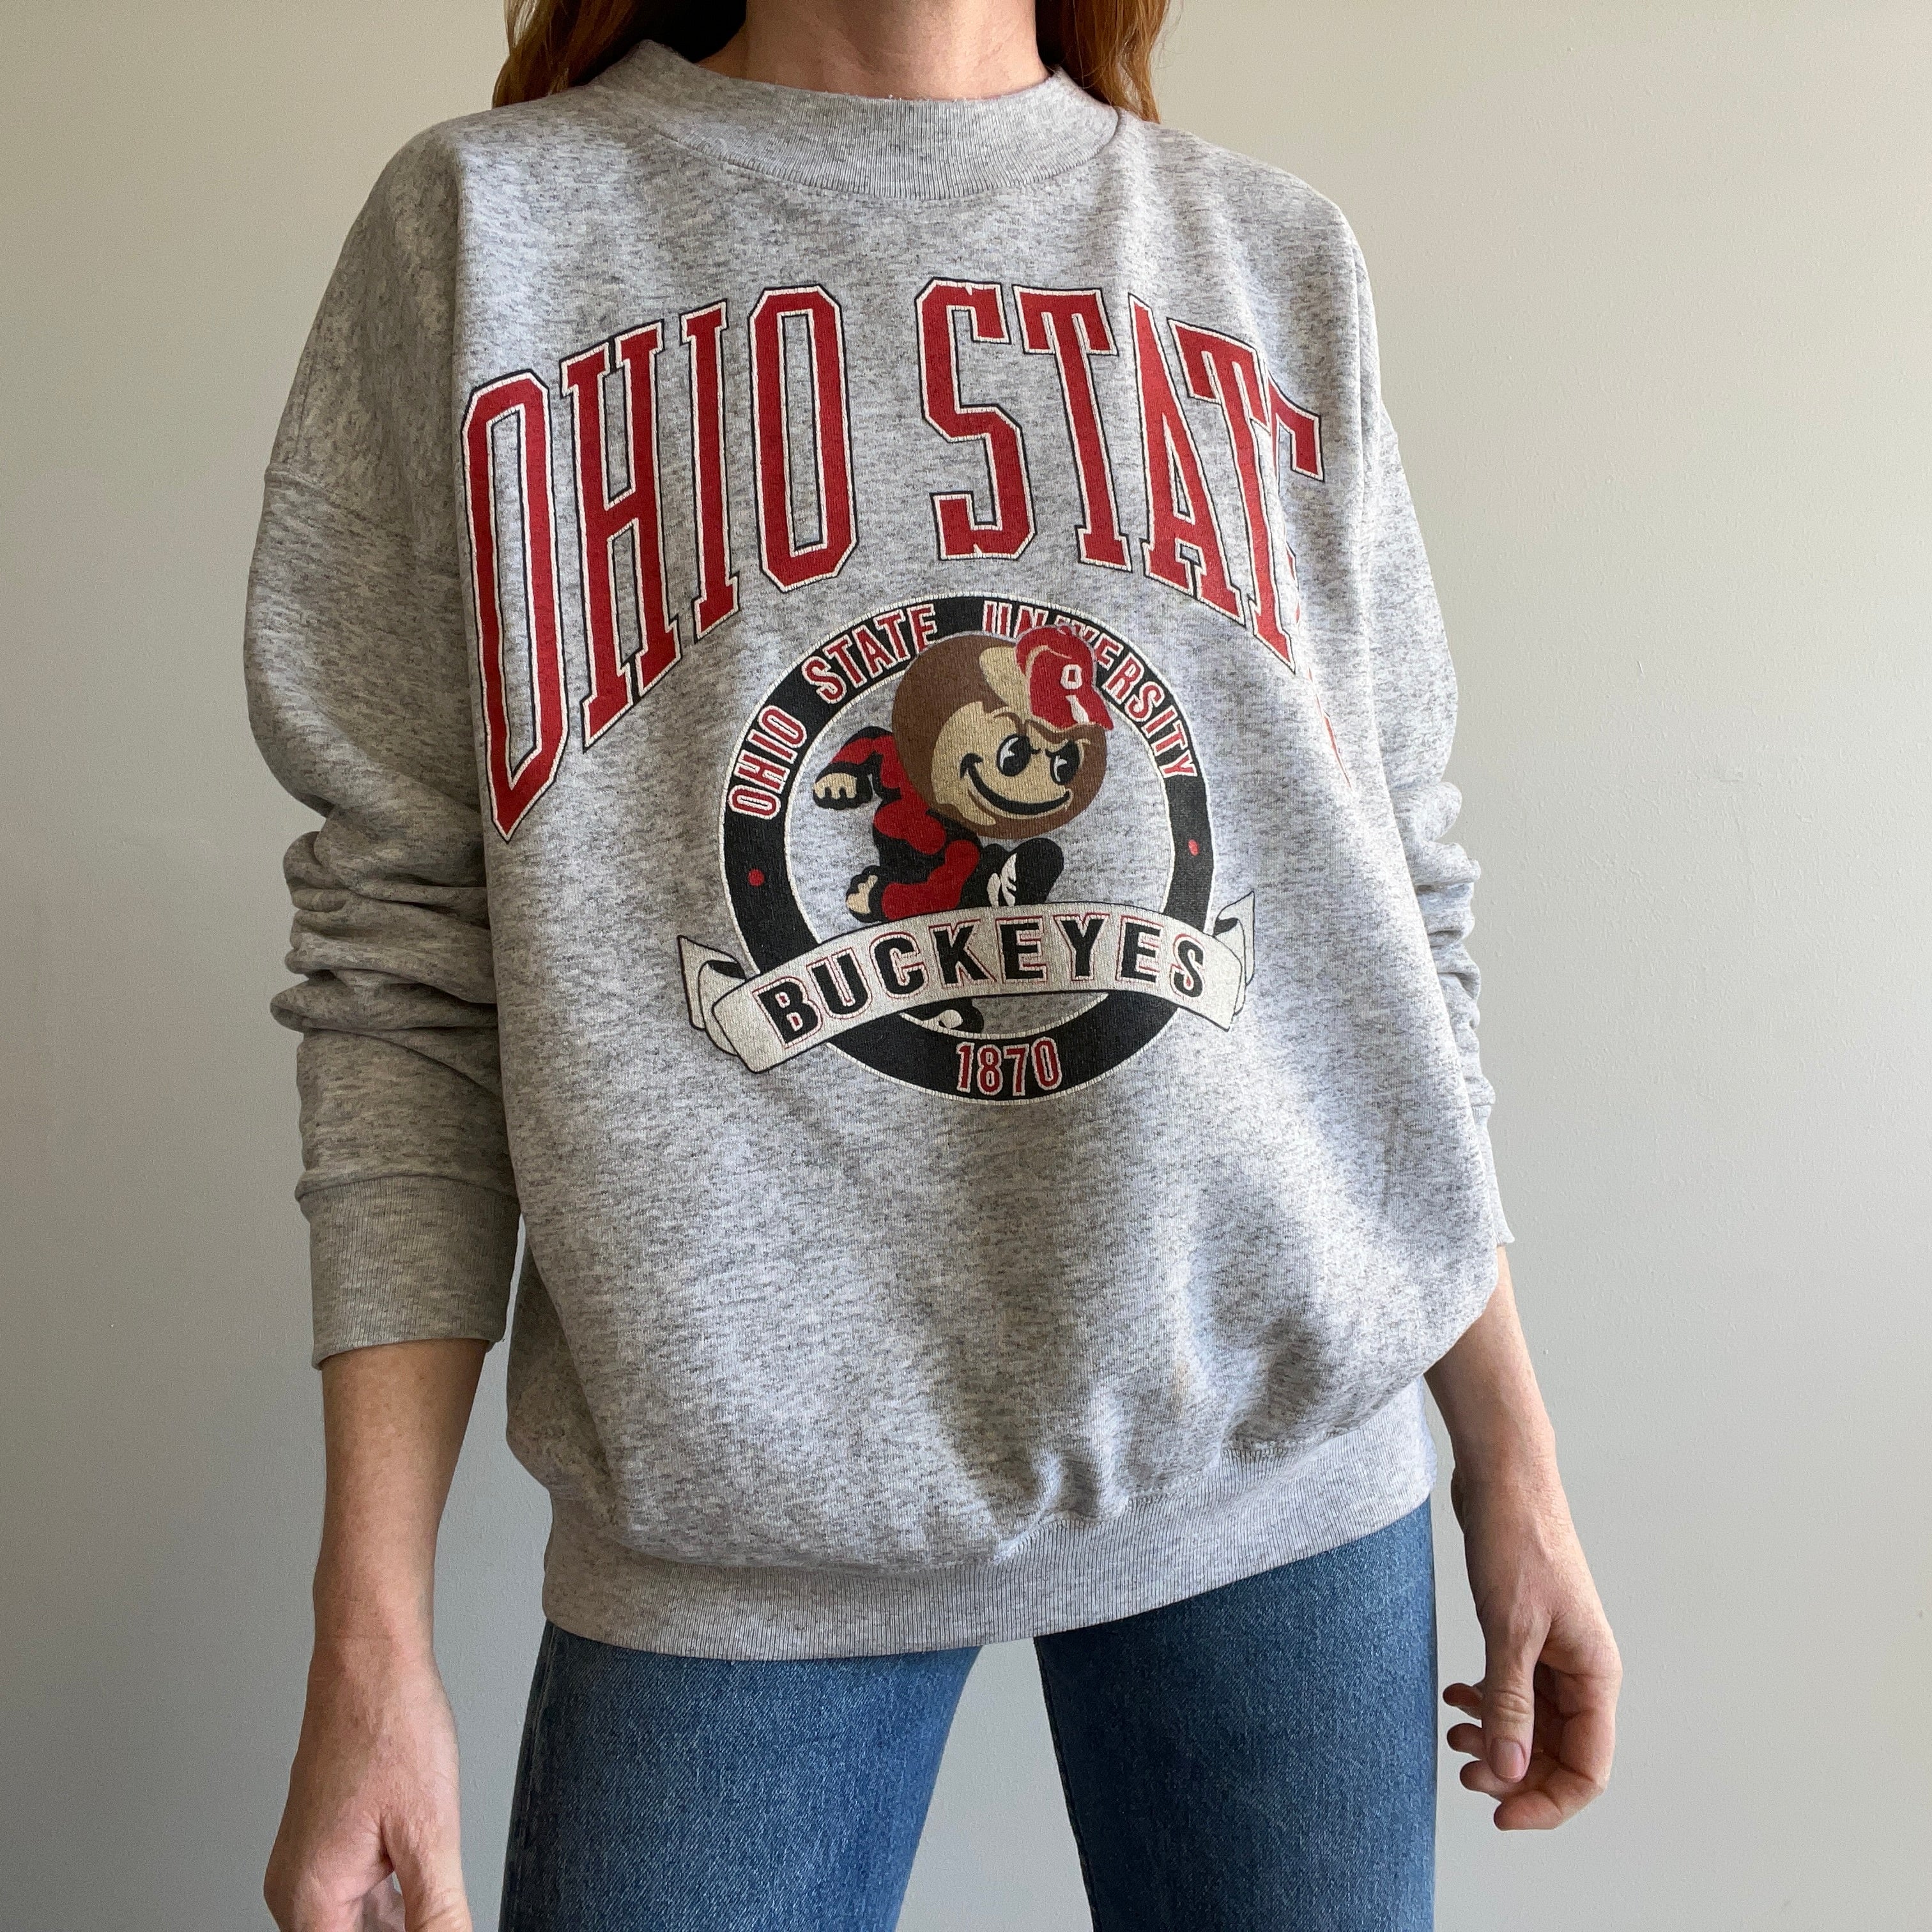 Sweat-shirt The Ohio State University des années 1990